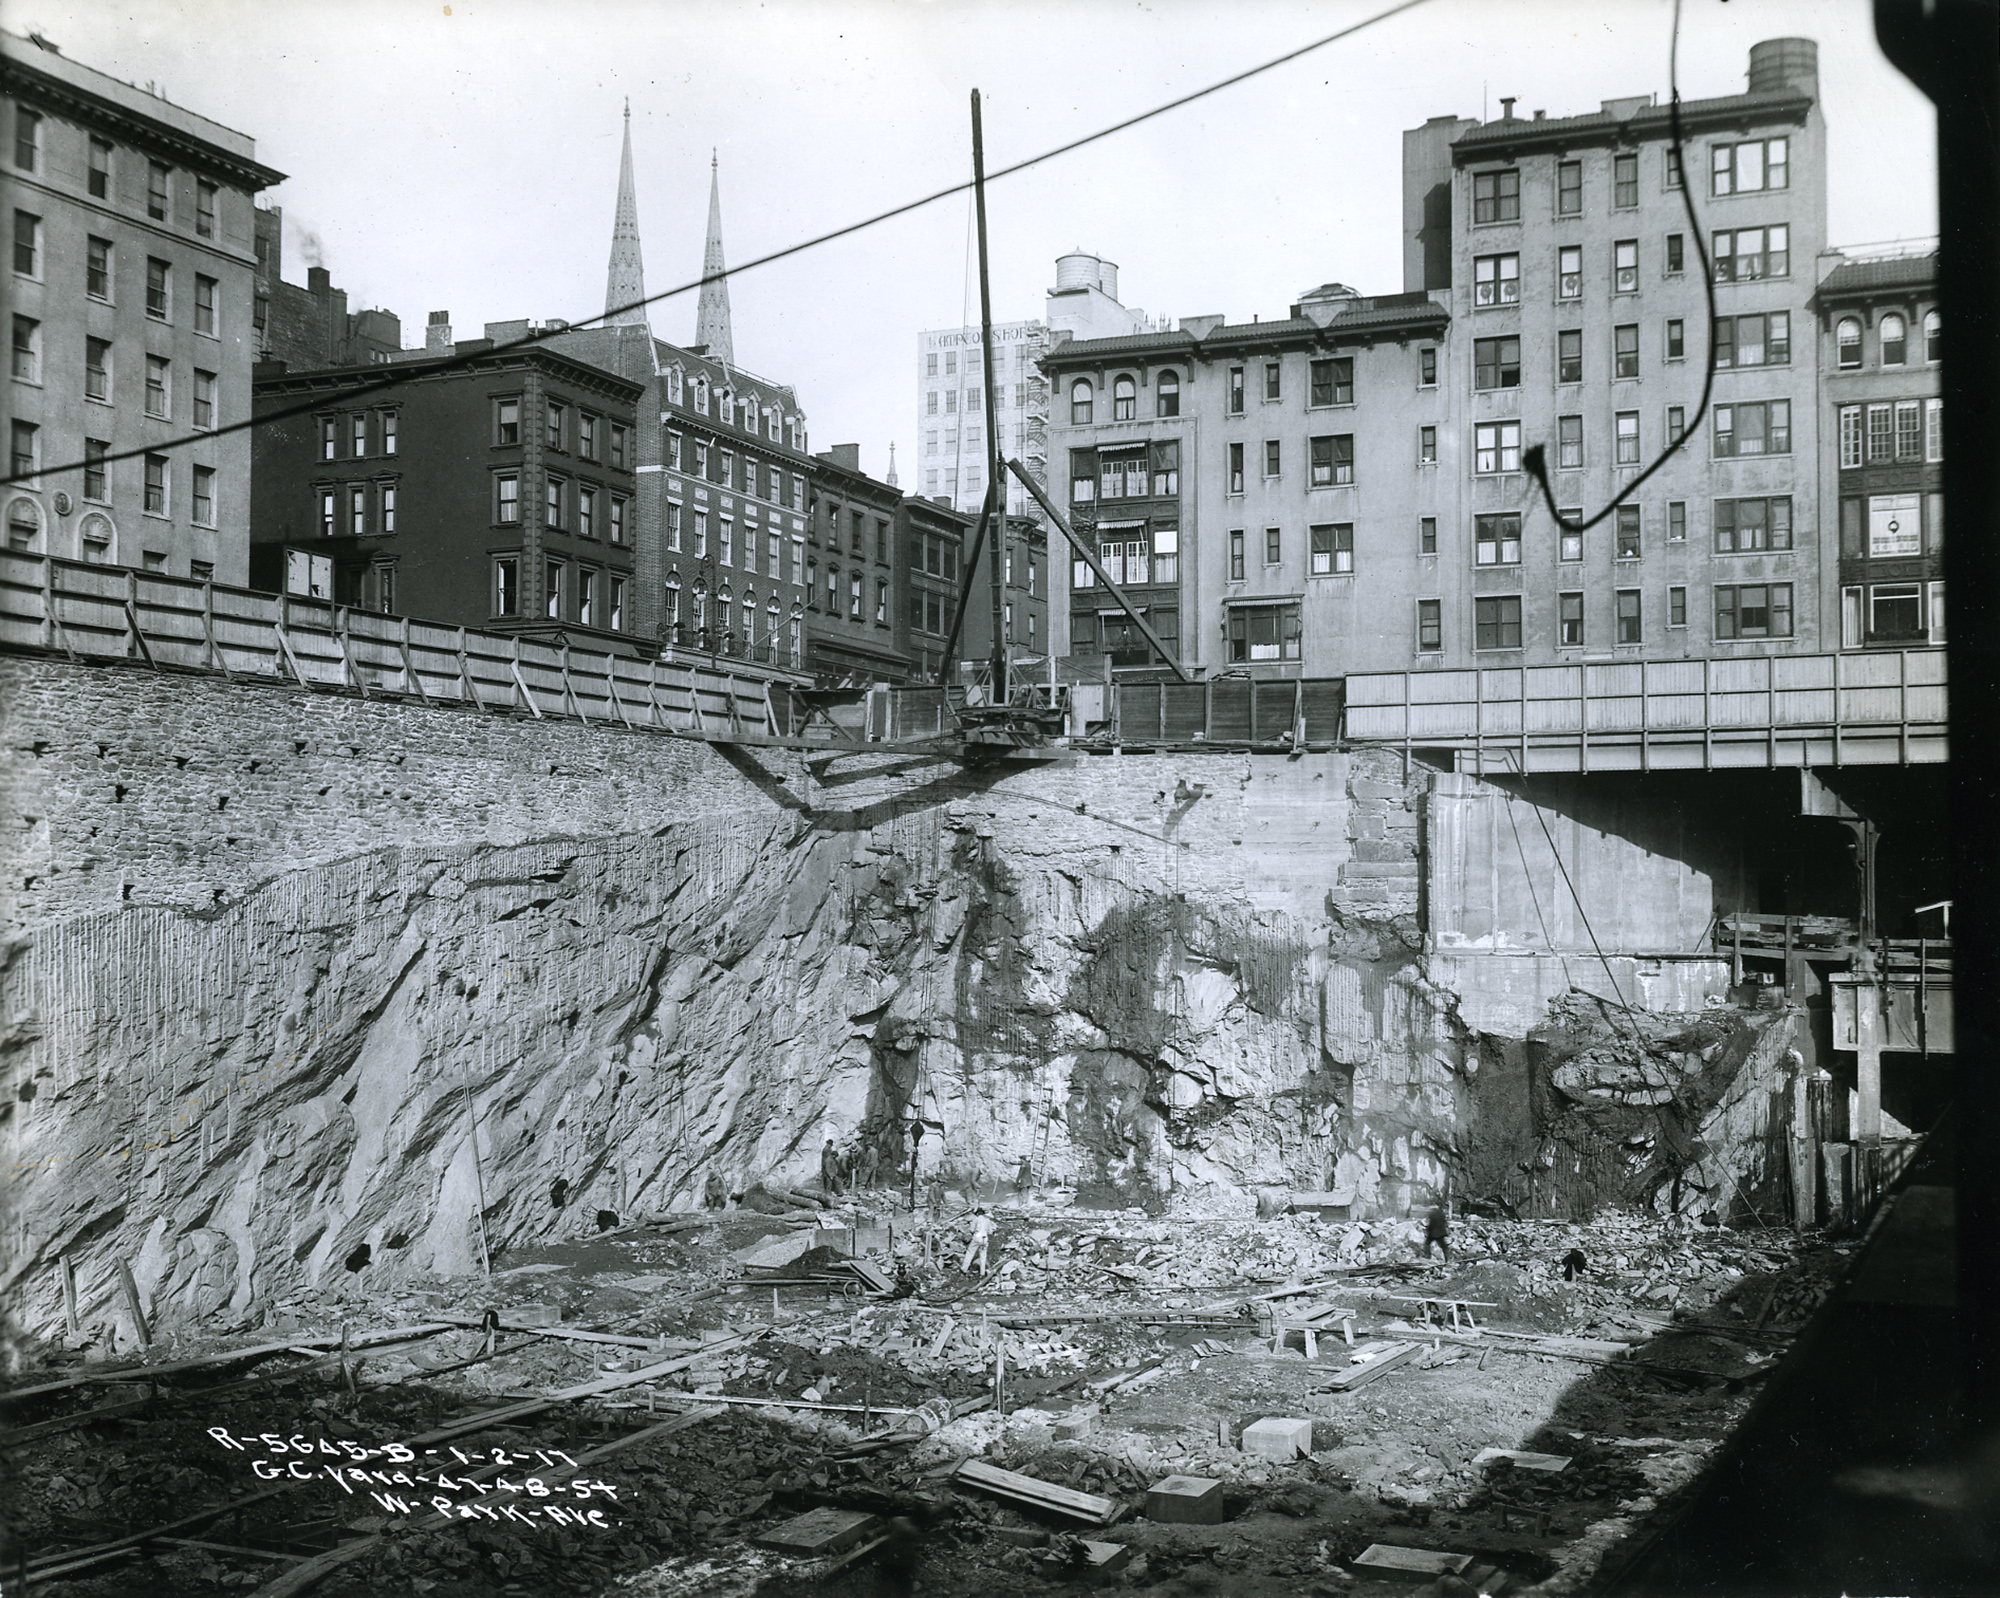 Grand Central train yard under construction, 1917